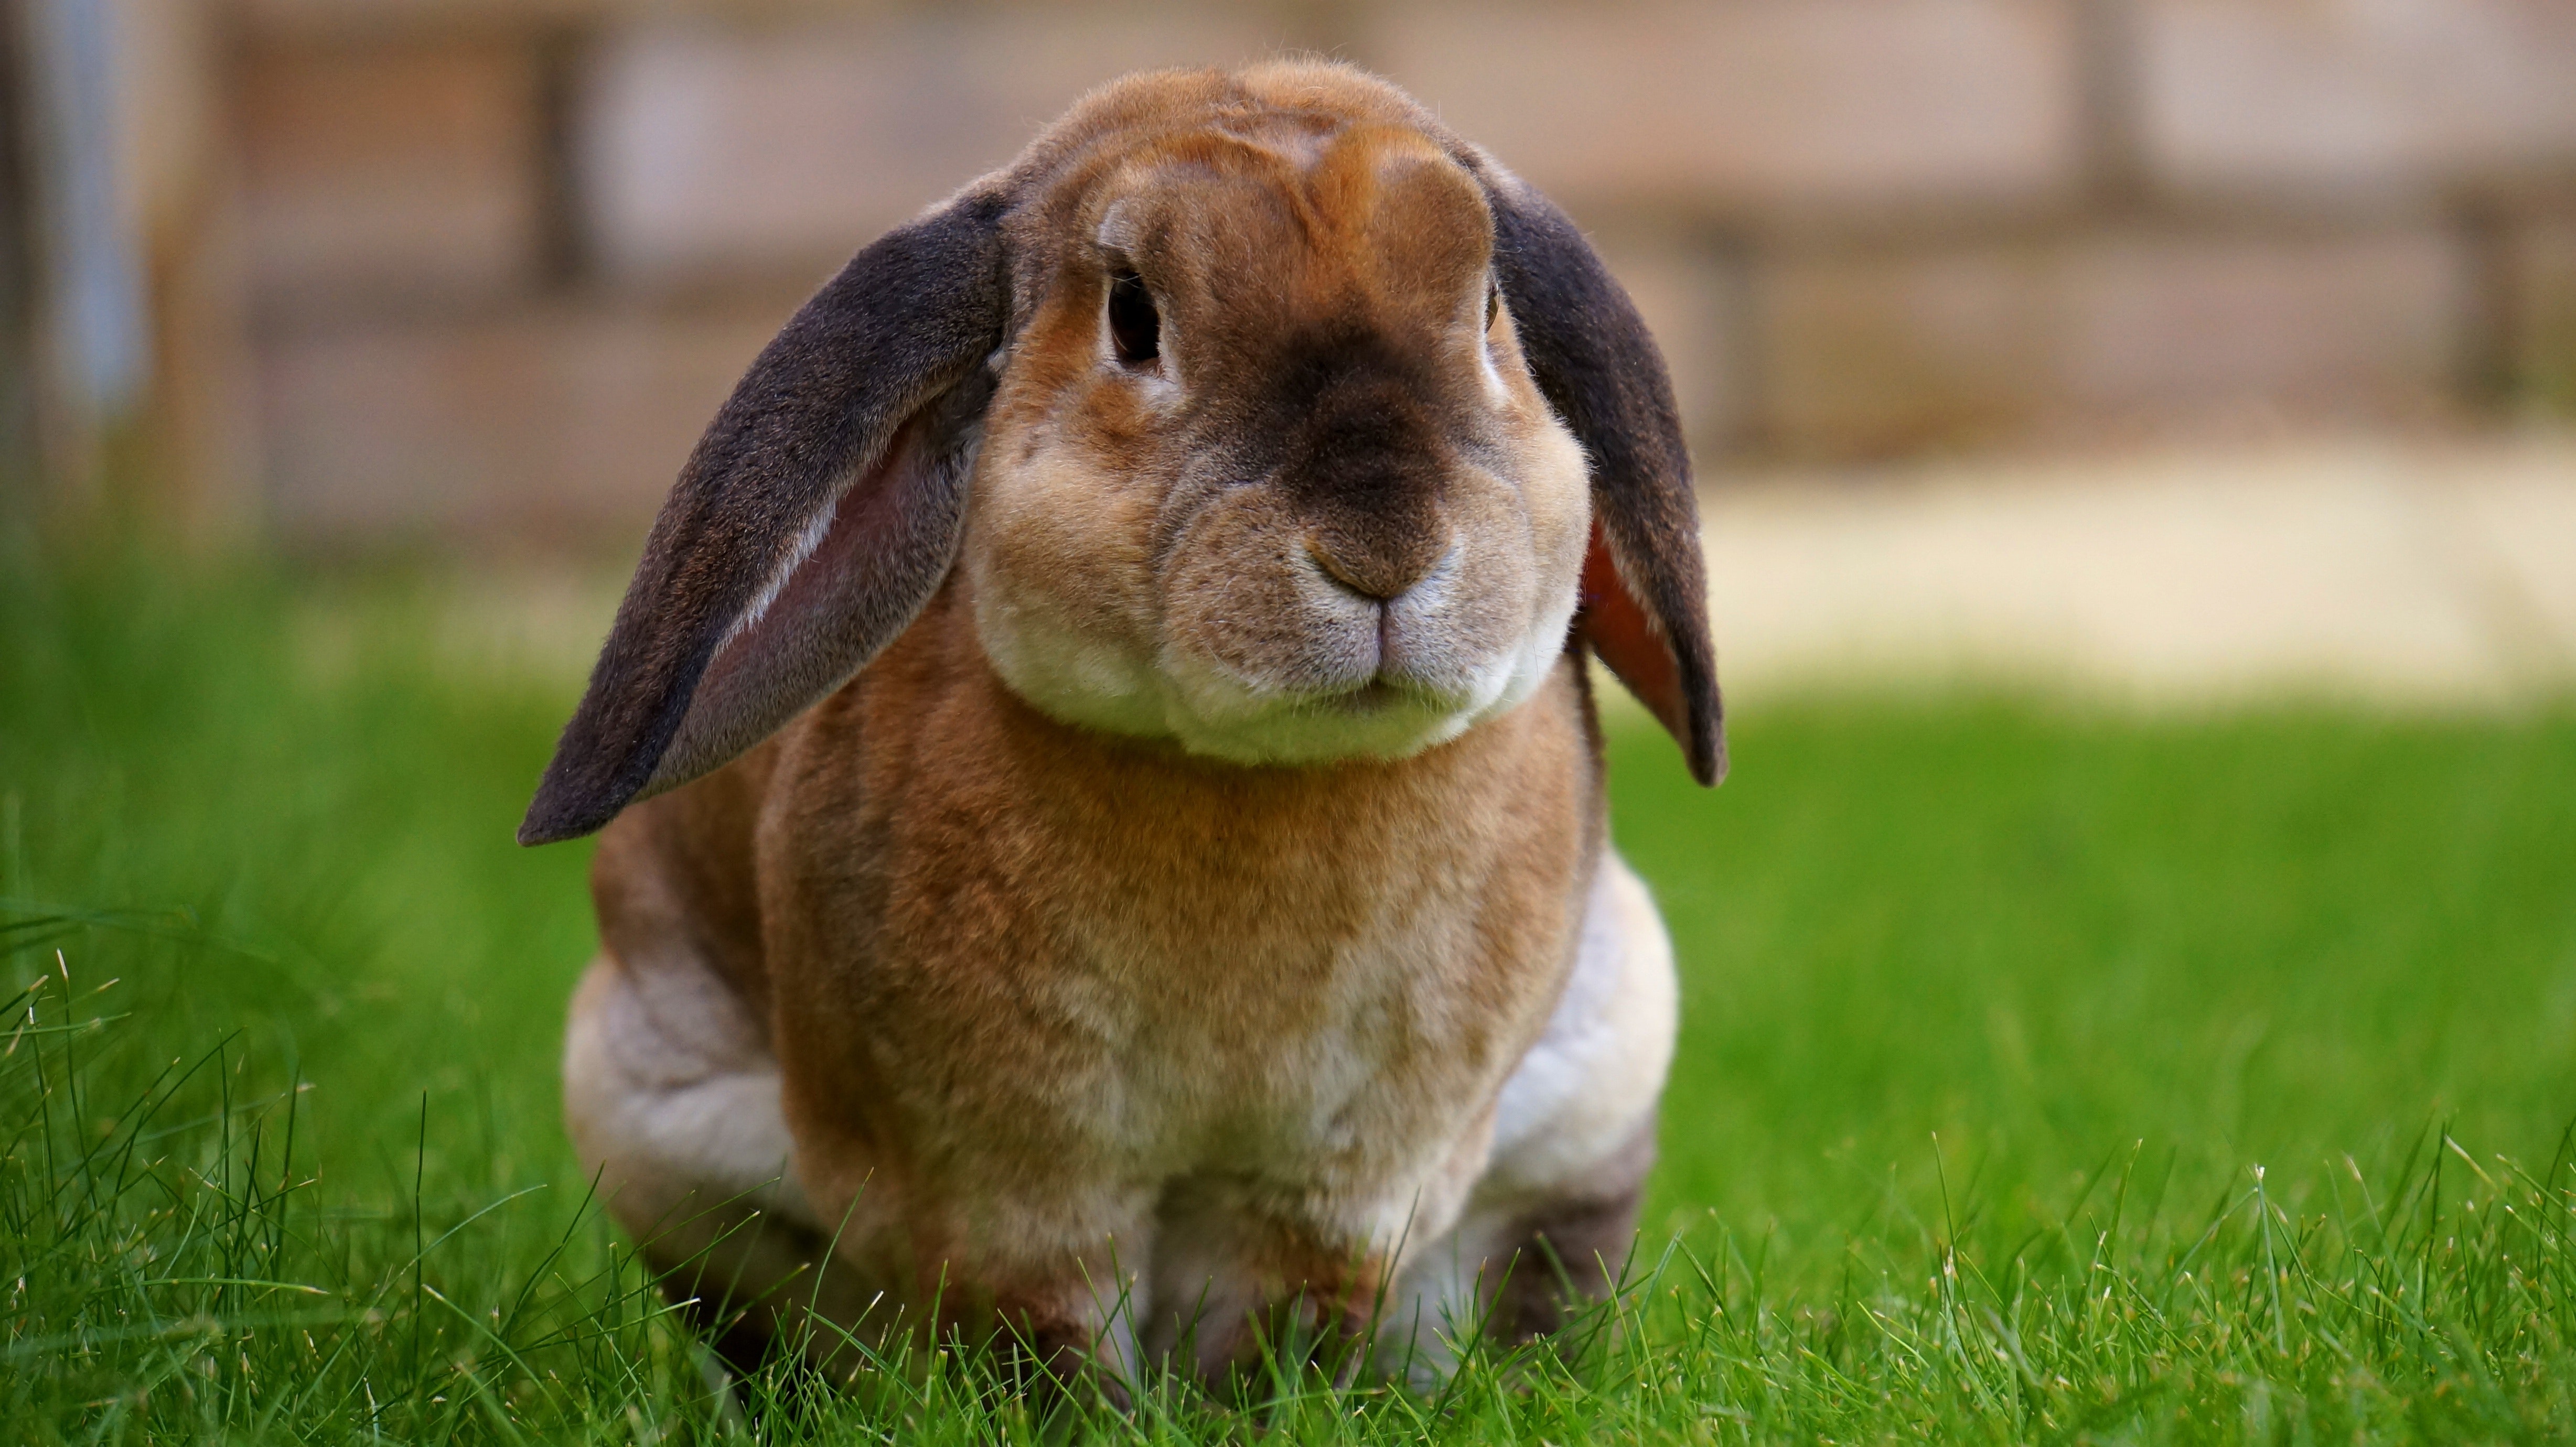 Free stock photos of rabbit · Pexels